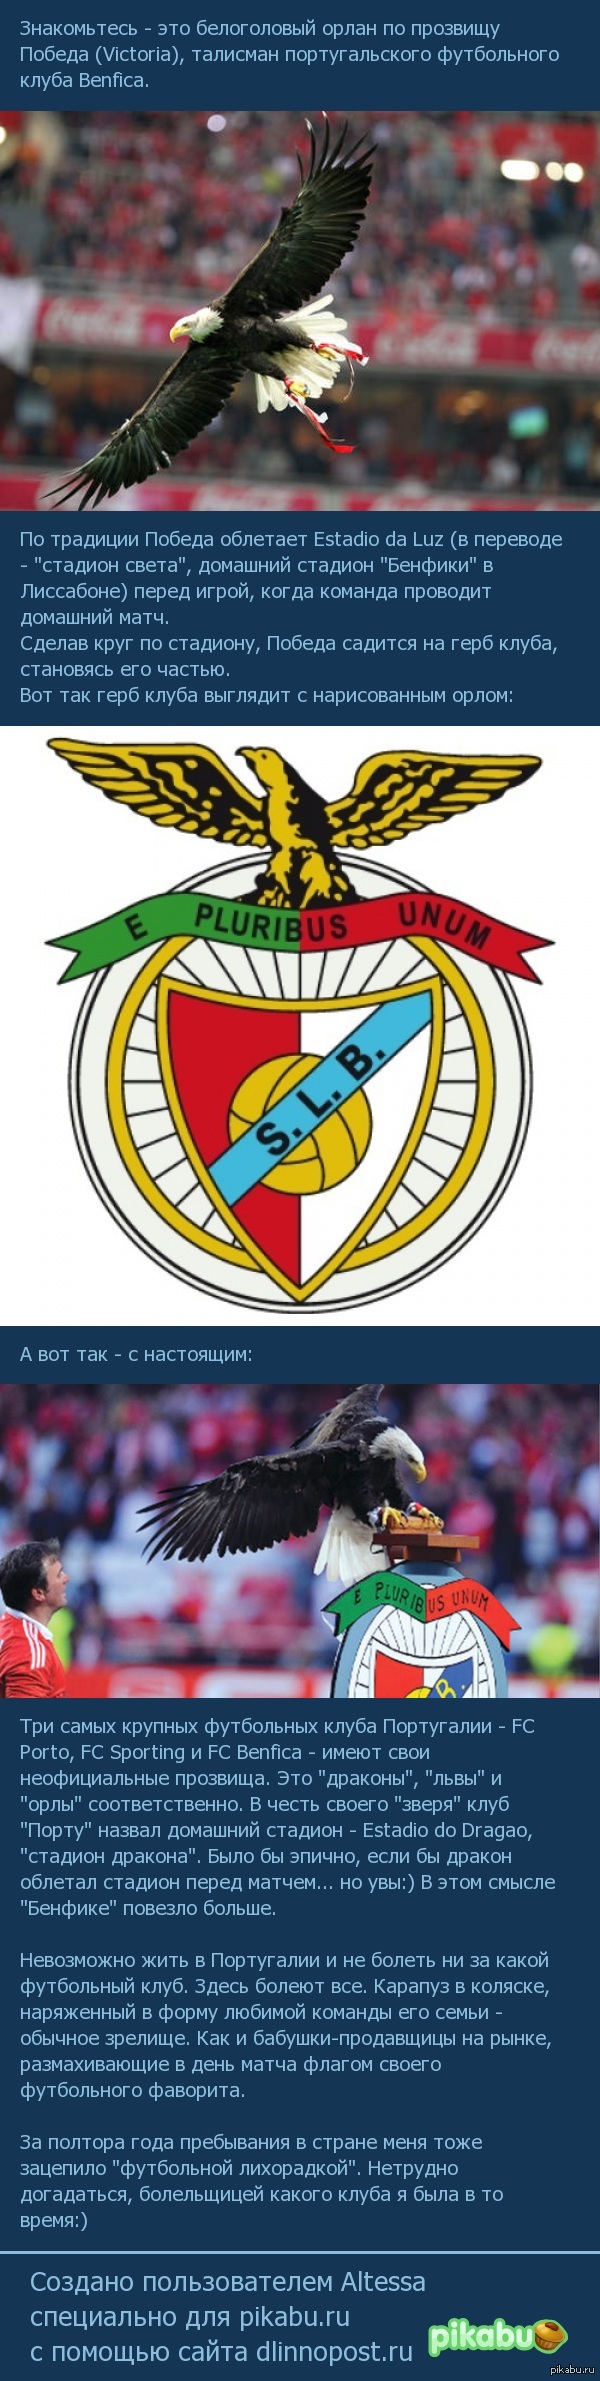        Benfica ()